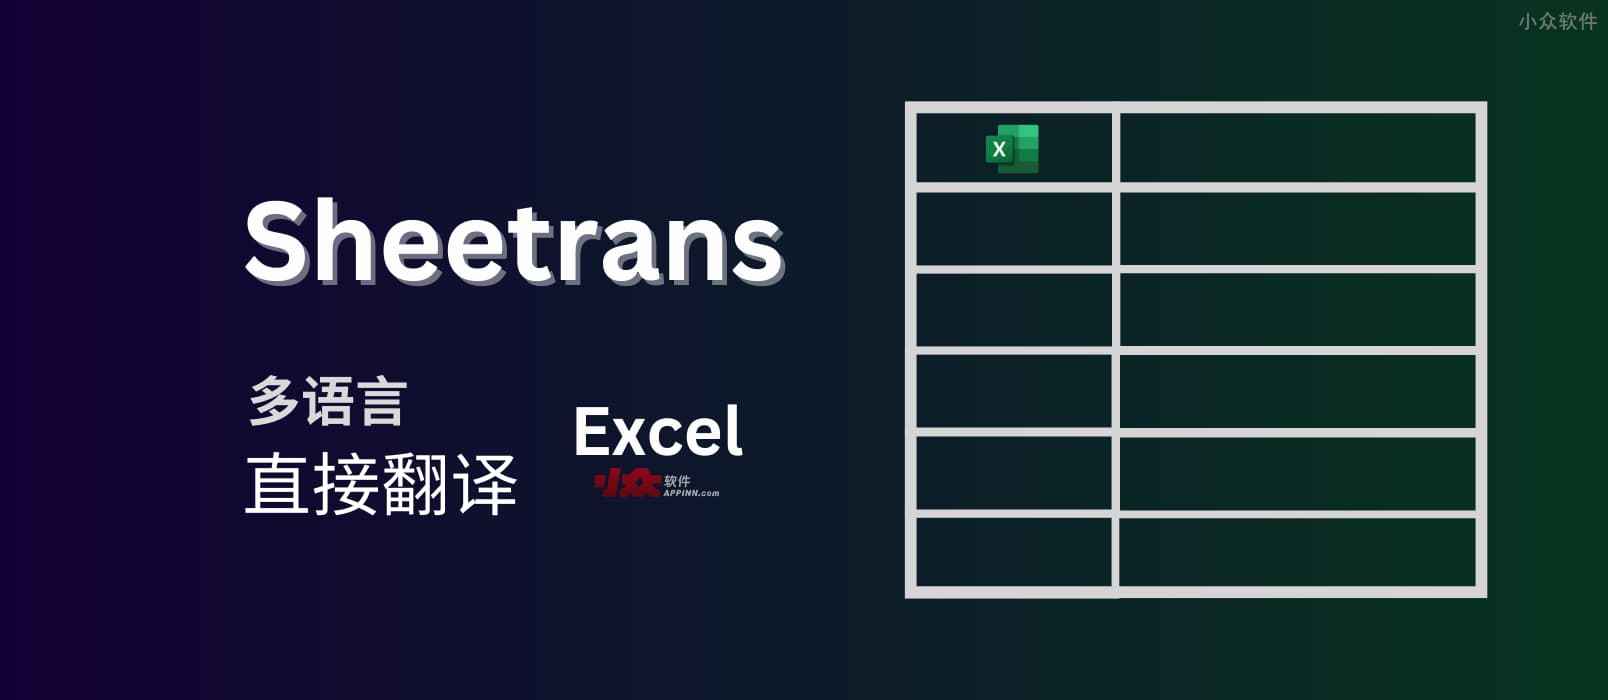 Sheetrans - 在线翻译 Excel 表格